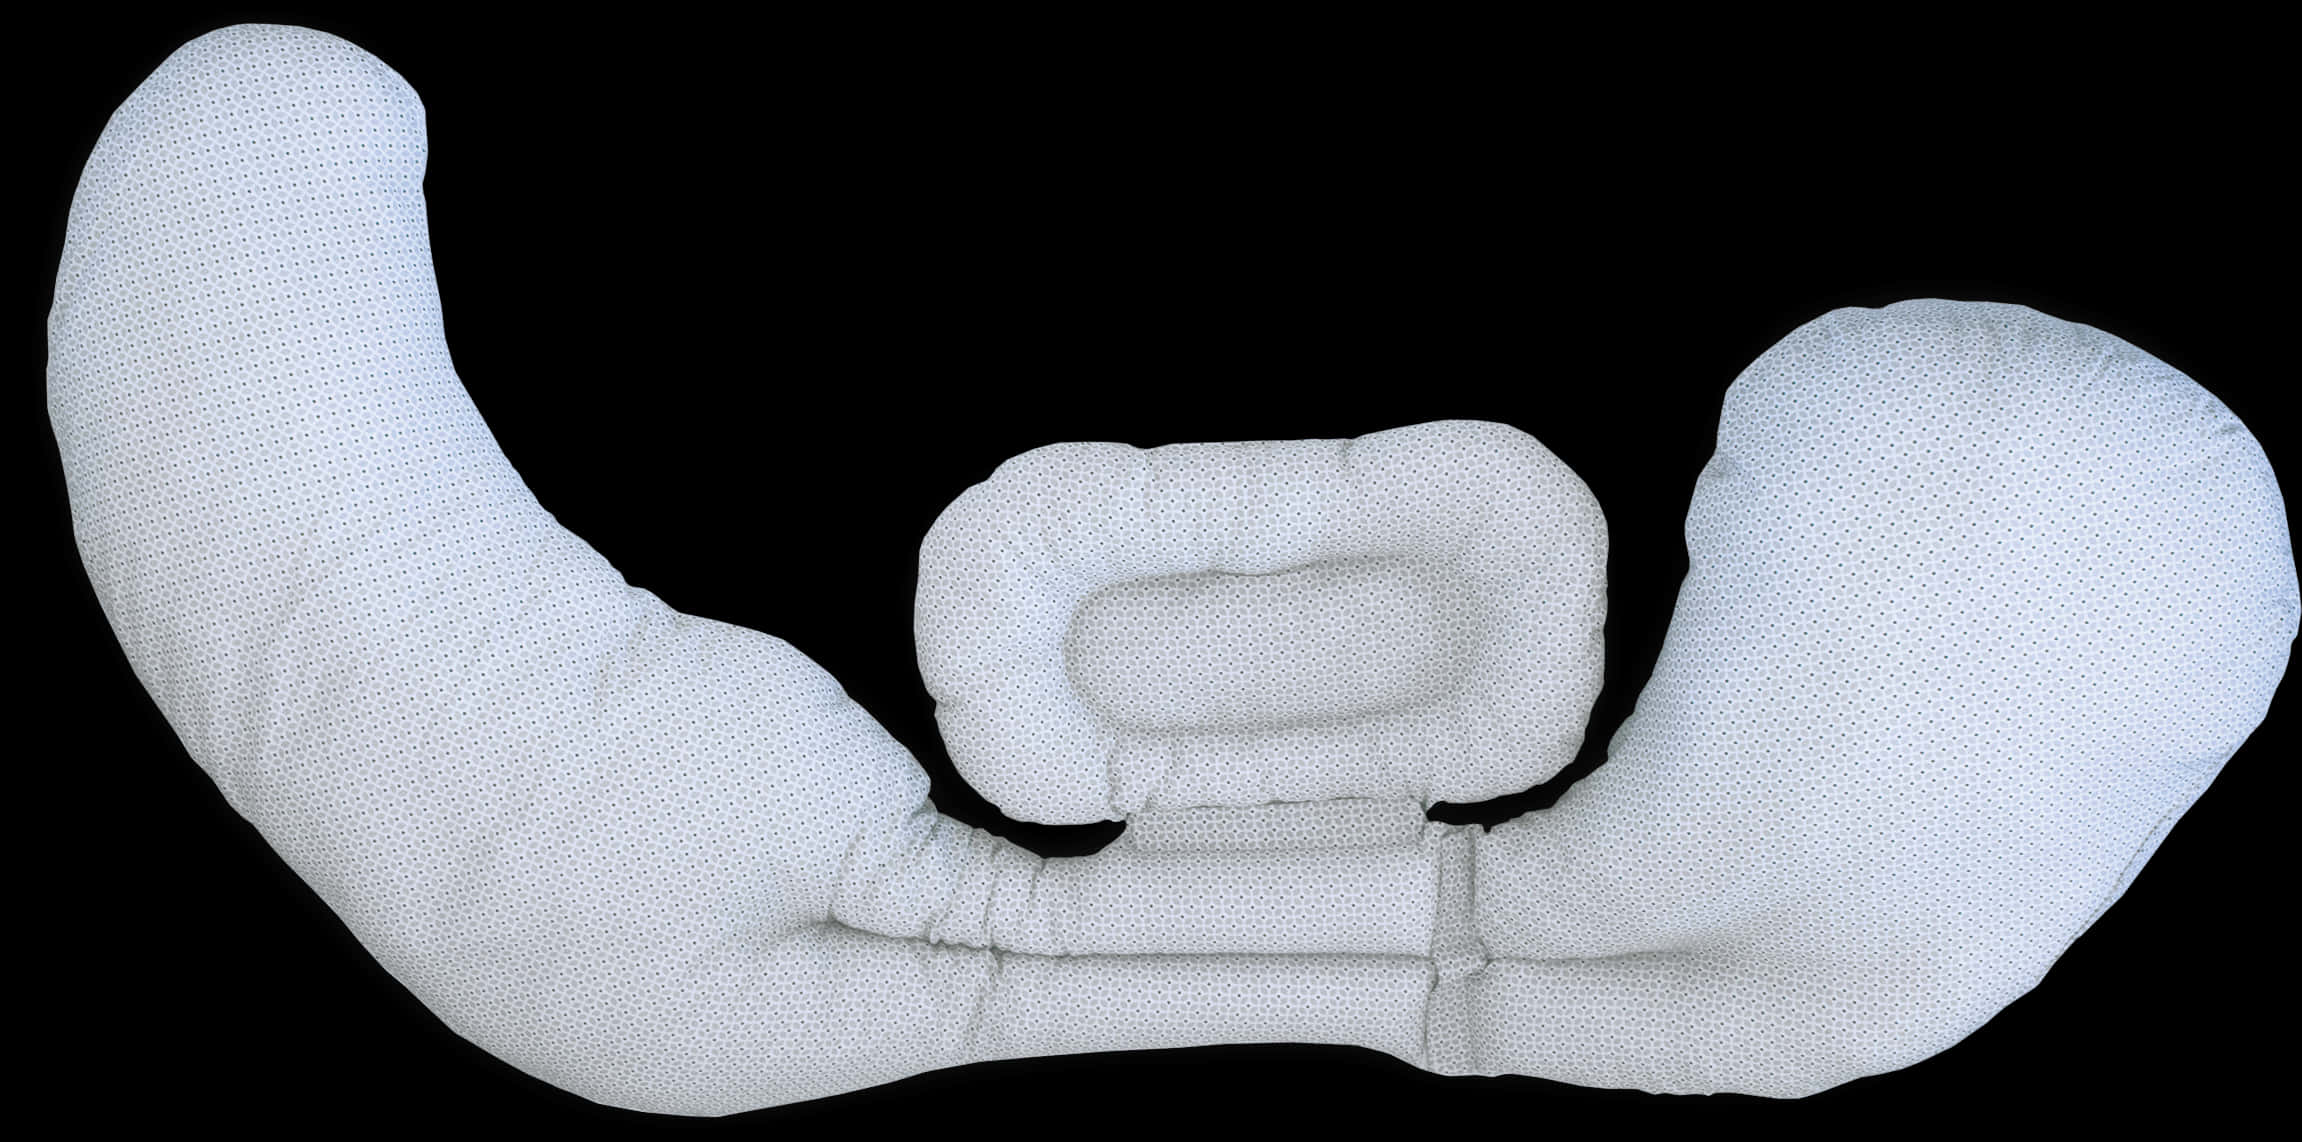 Ergonomic Body Pillow Design